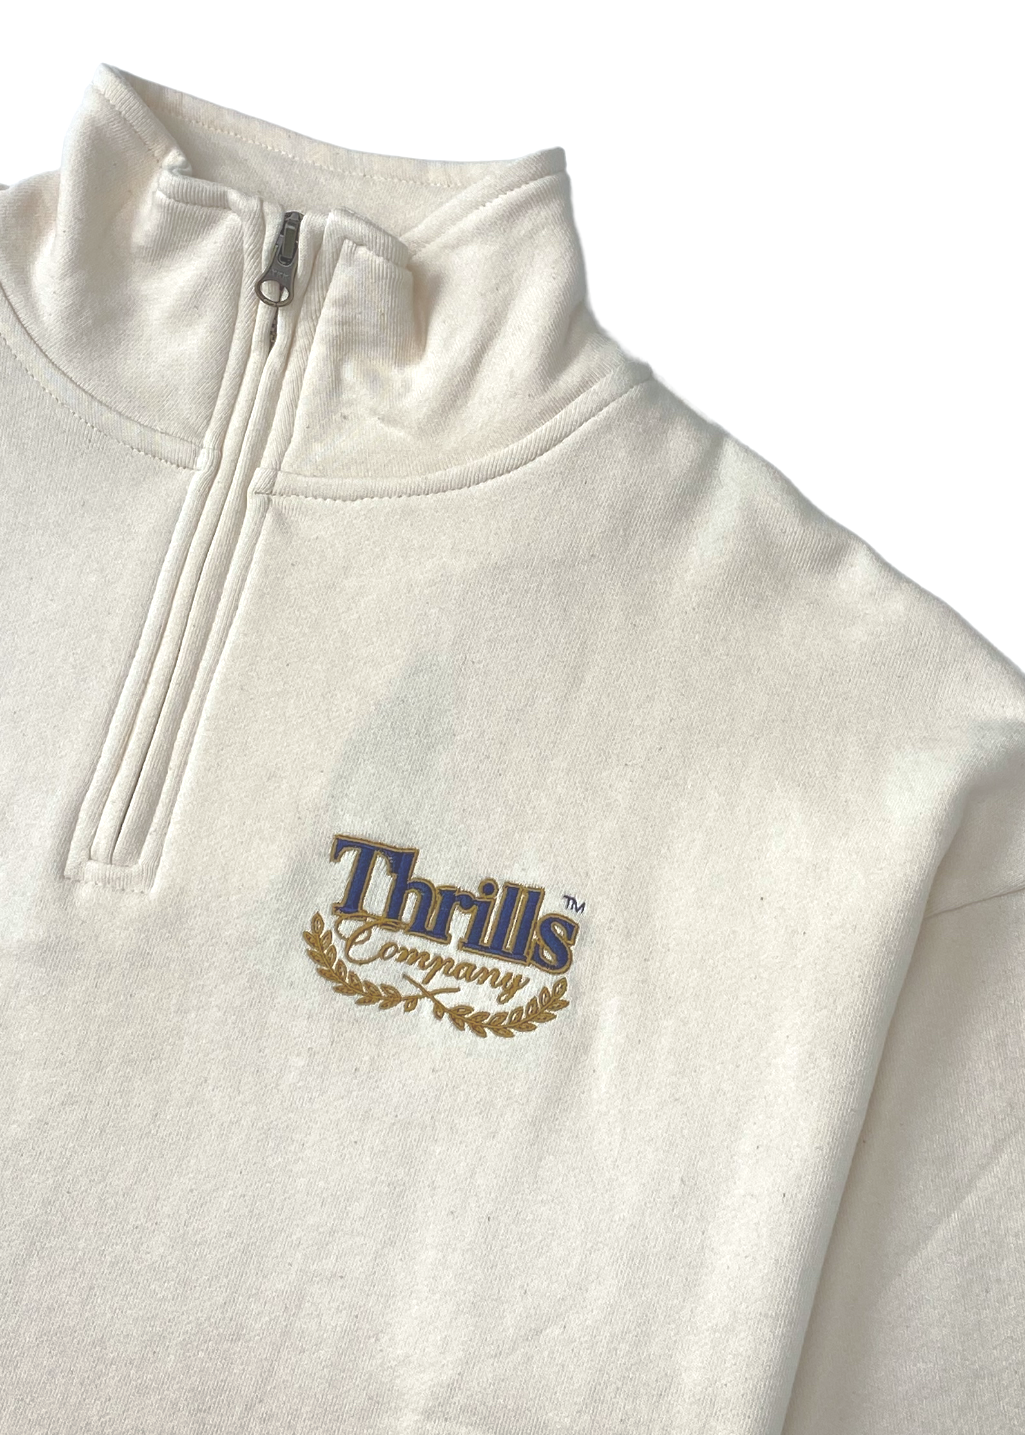 THRILLS - Deluxe 3/4 Zip Pullover - Unbleached - Hardpressed Print Studio Inc.